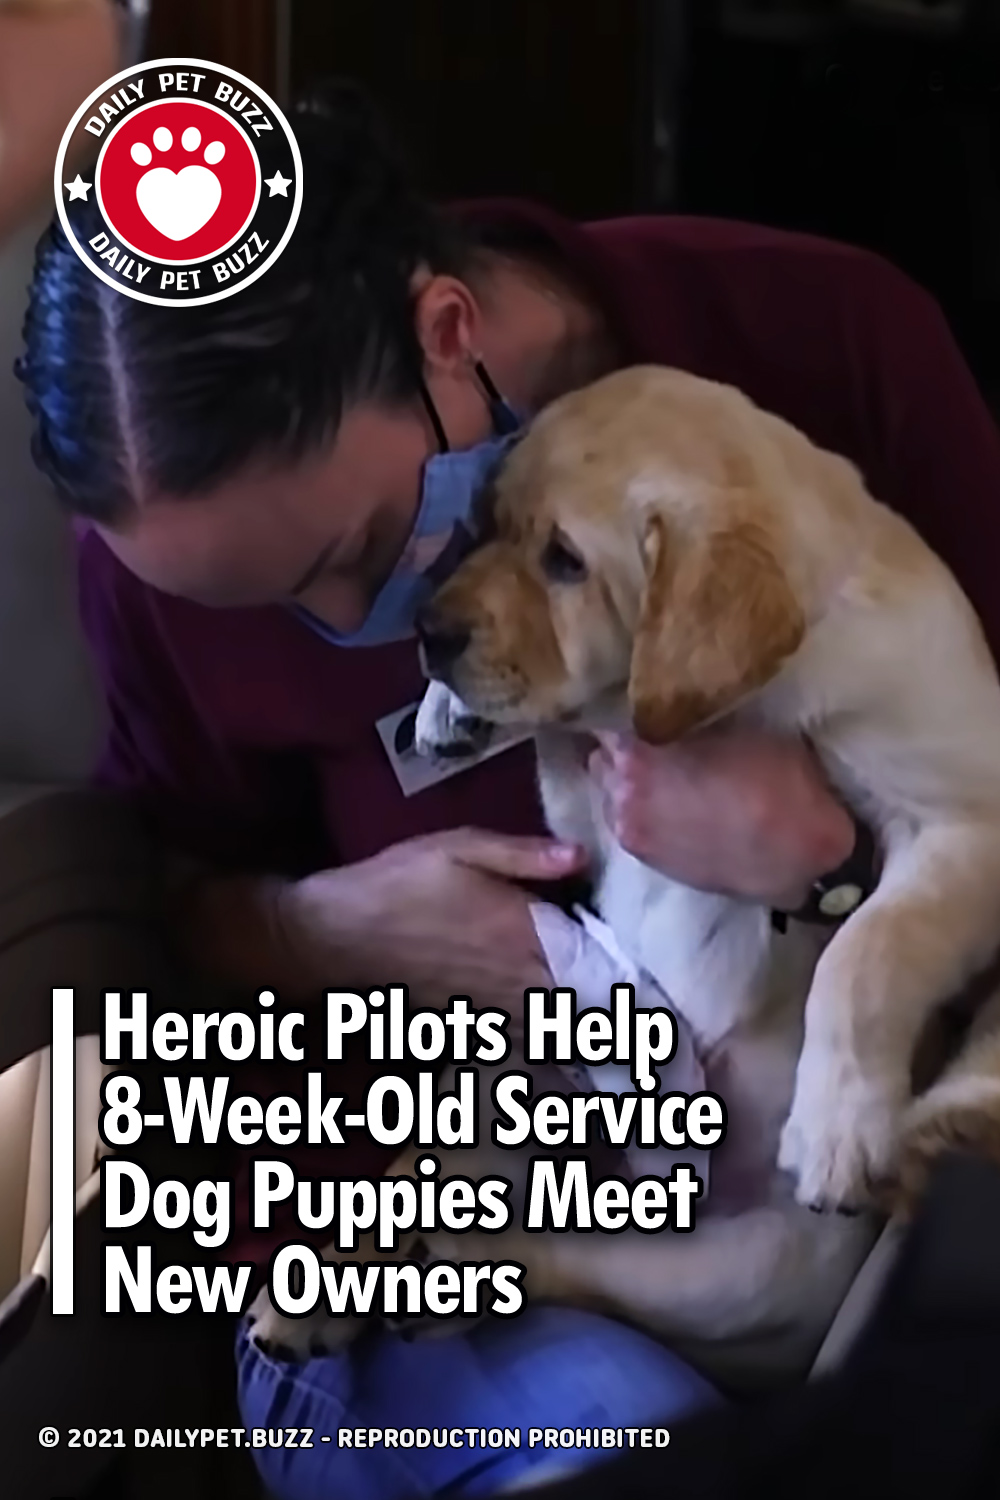 Heroic Pilots Help 8-Week-Old Service Dog Puppies Meet New Owners